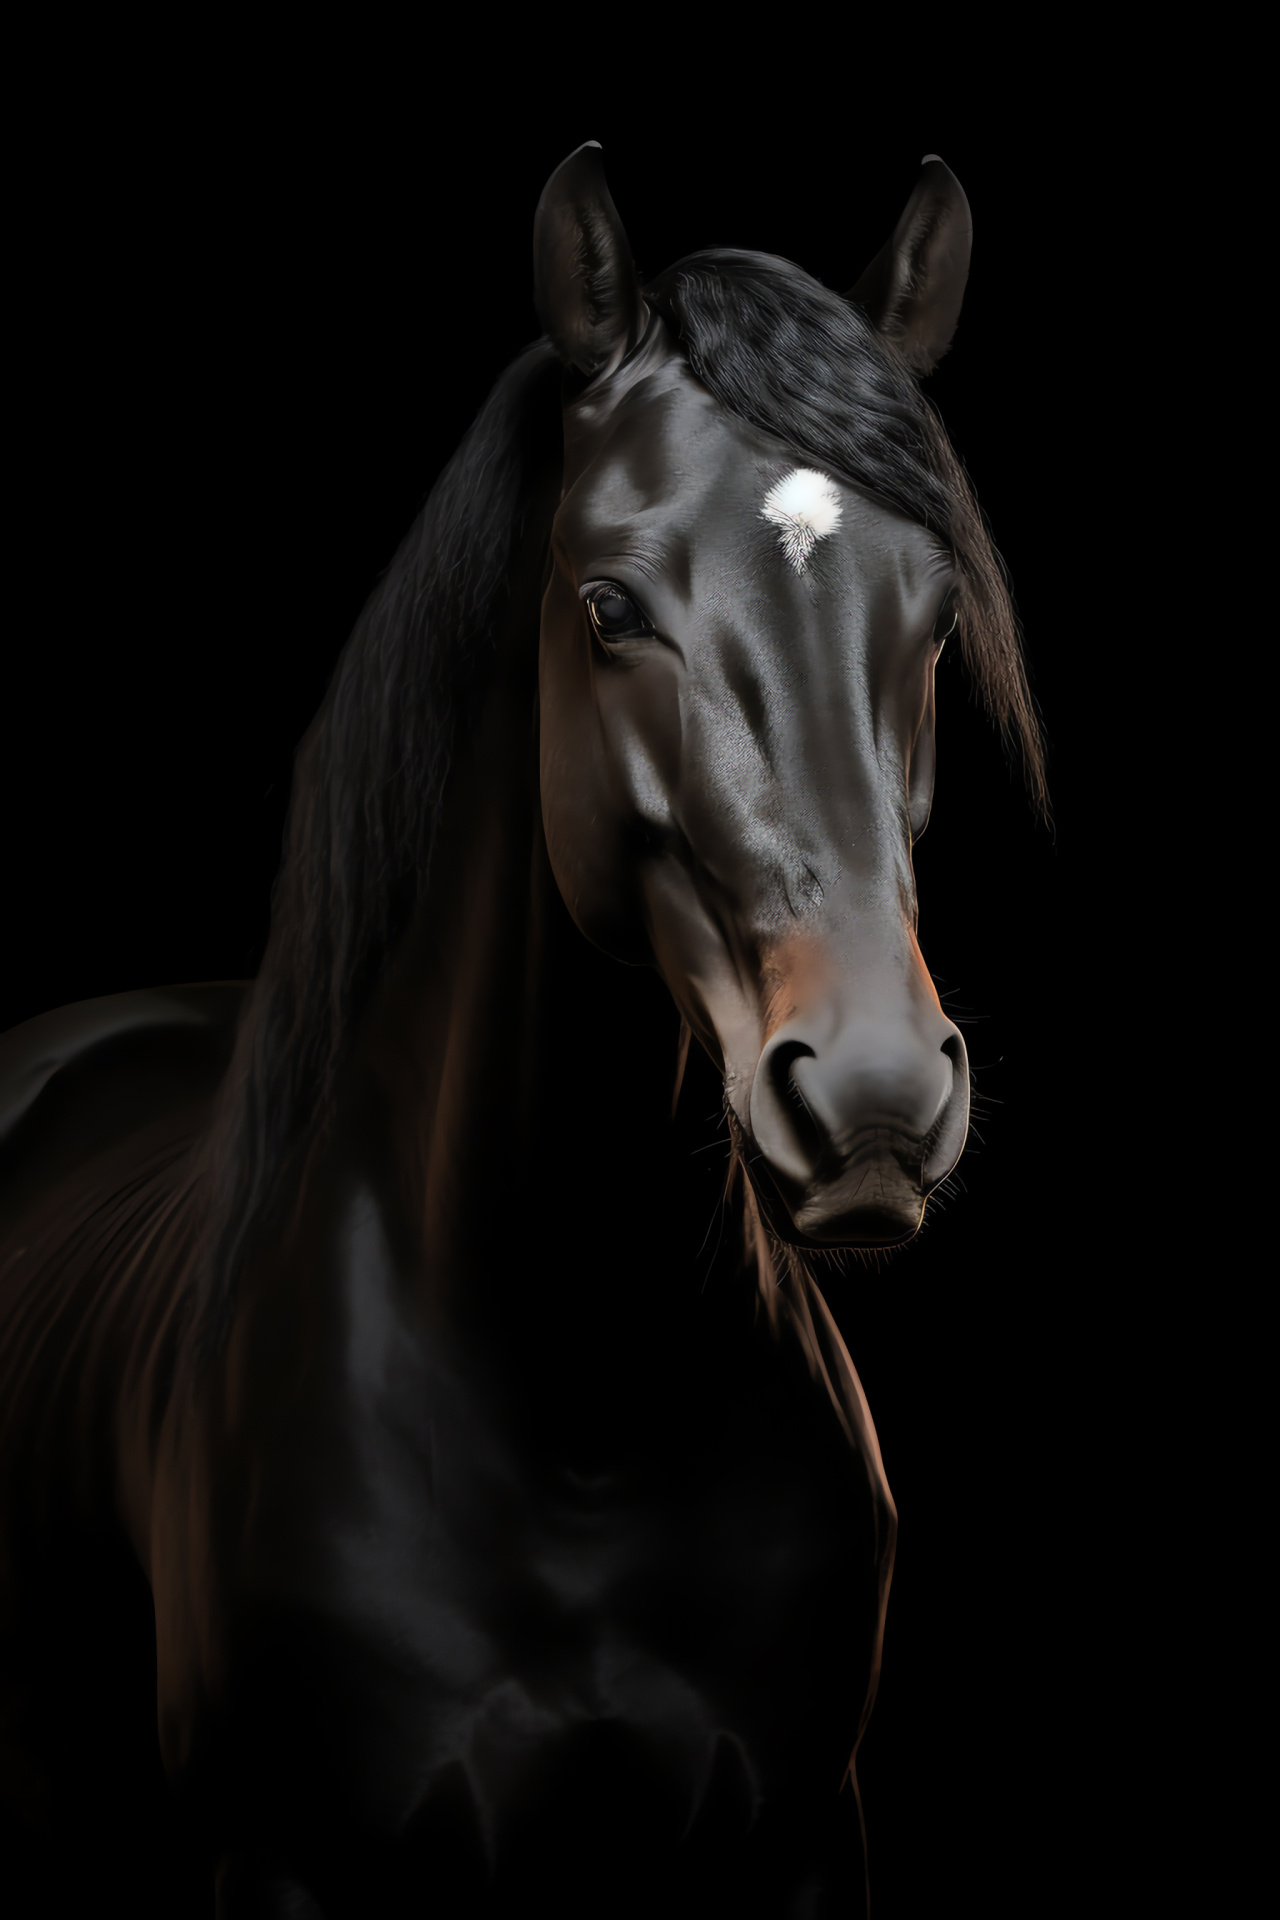 Wild Horse vantage, Black coat sheen, White facial marking, Strong equine form, Shadowed backdrop, HD Phone Wallpaper